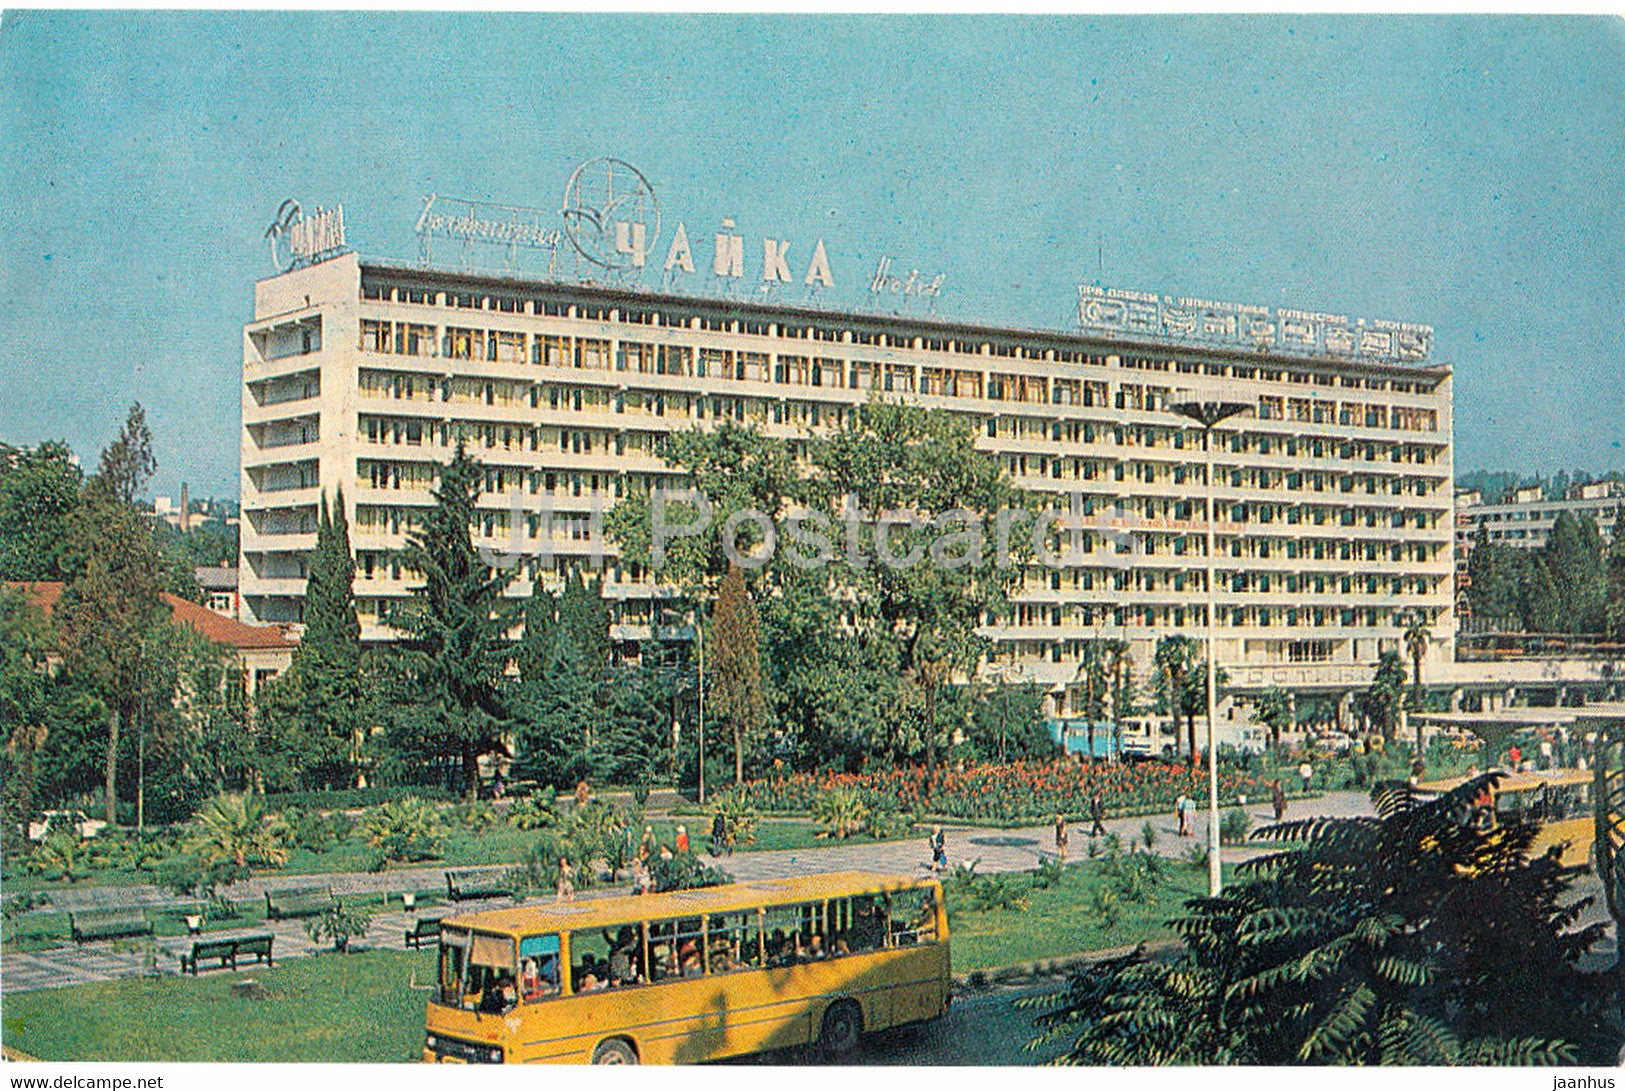 Sochi - hotel Chaika (Seagull) - bus Ikarus - 1981 - Russia USSR - unused - JH Postcards